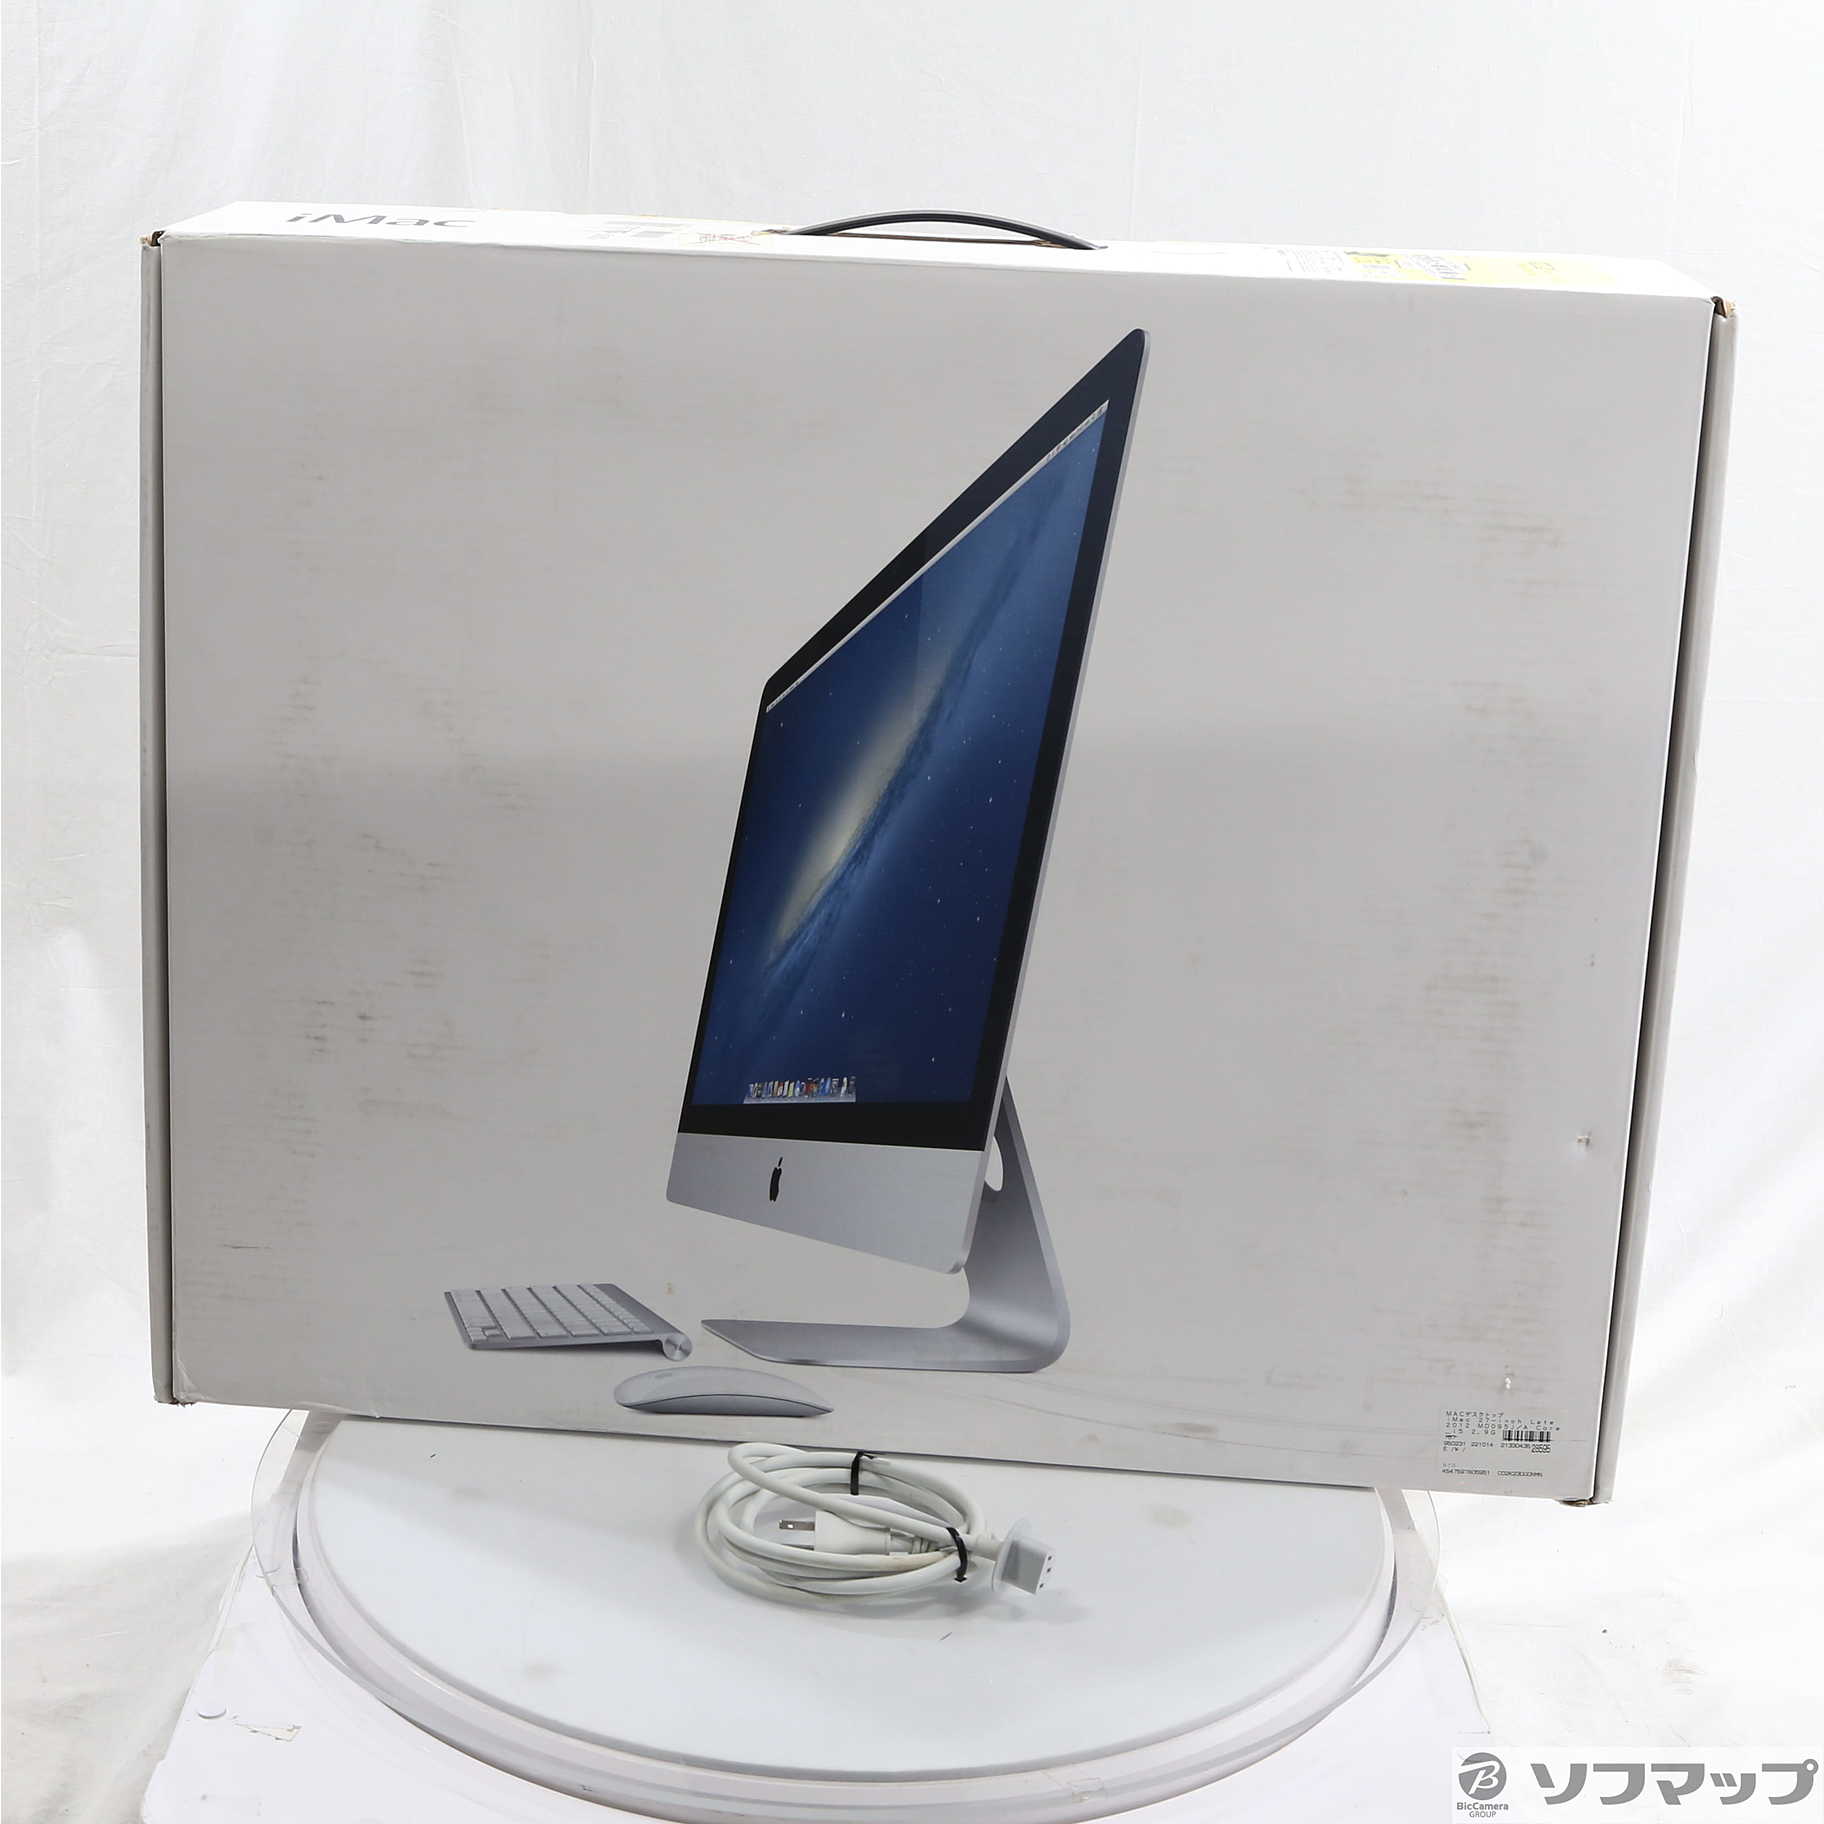 中古品〕 iMac 27-inch Late 2012 MD095J／A Core_i5 2.9GHz 32GB